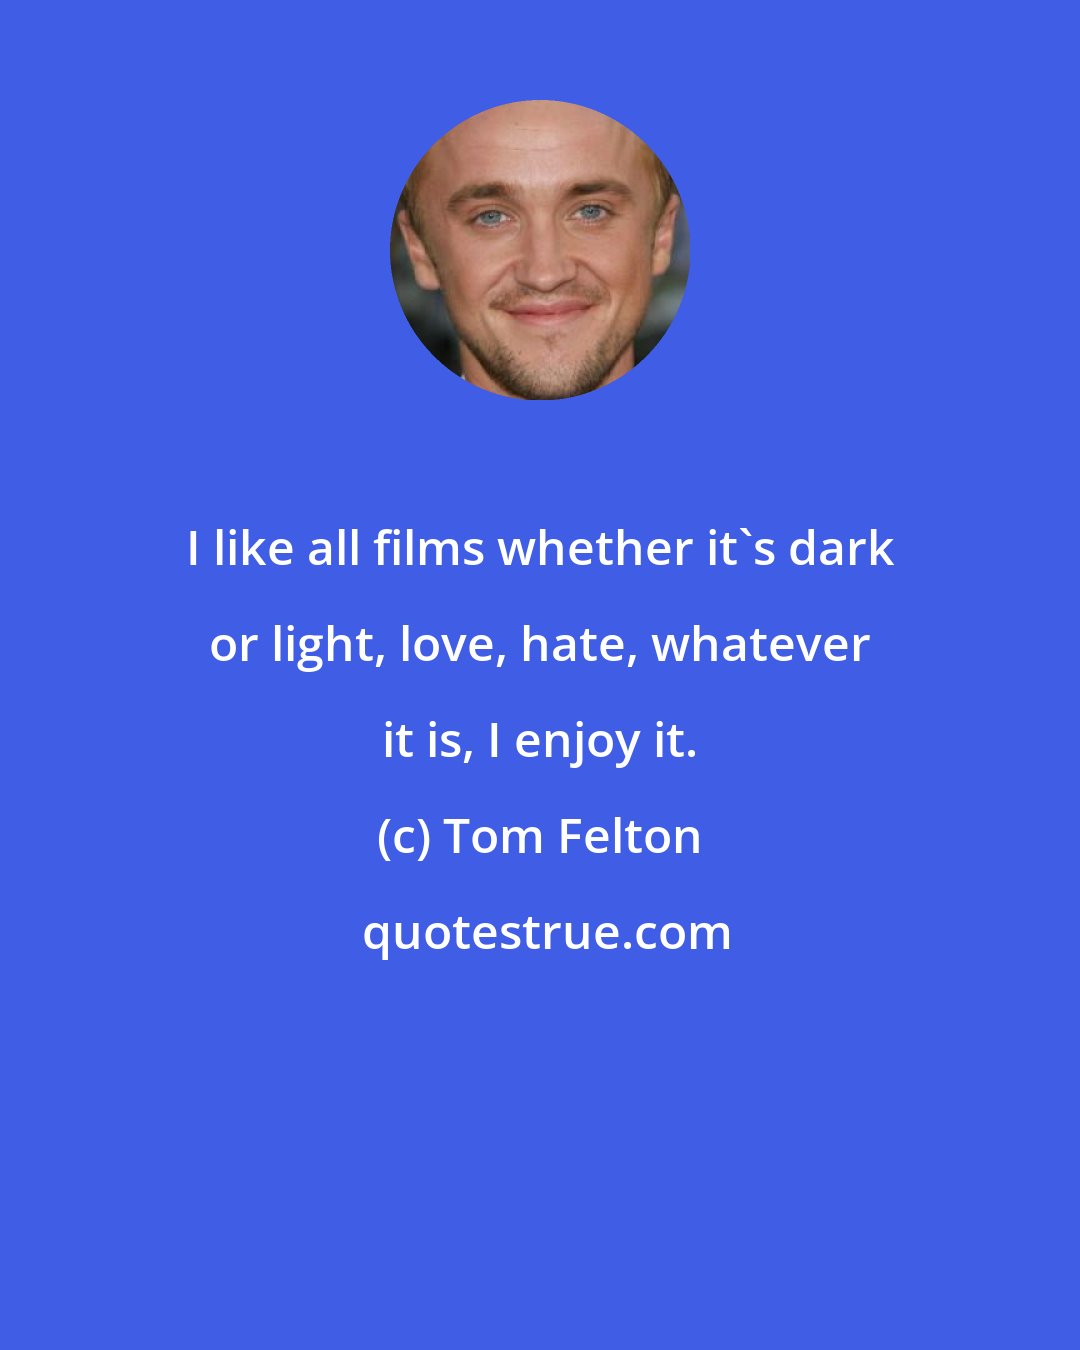 Tom Felton: I like all films whether it's dark or light, love, hate, whatever it is, I enjoy it.